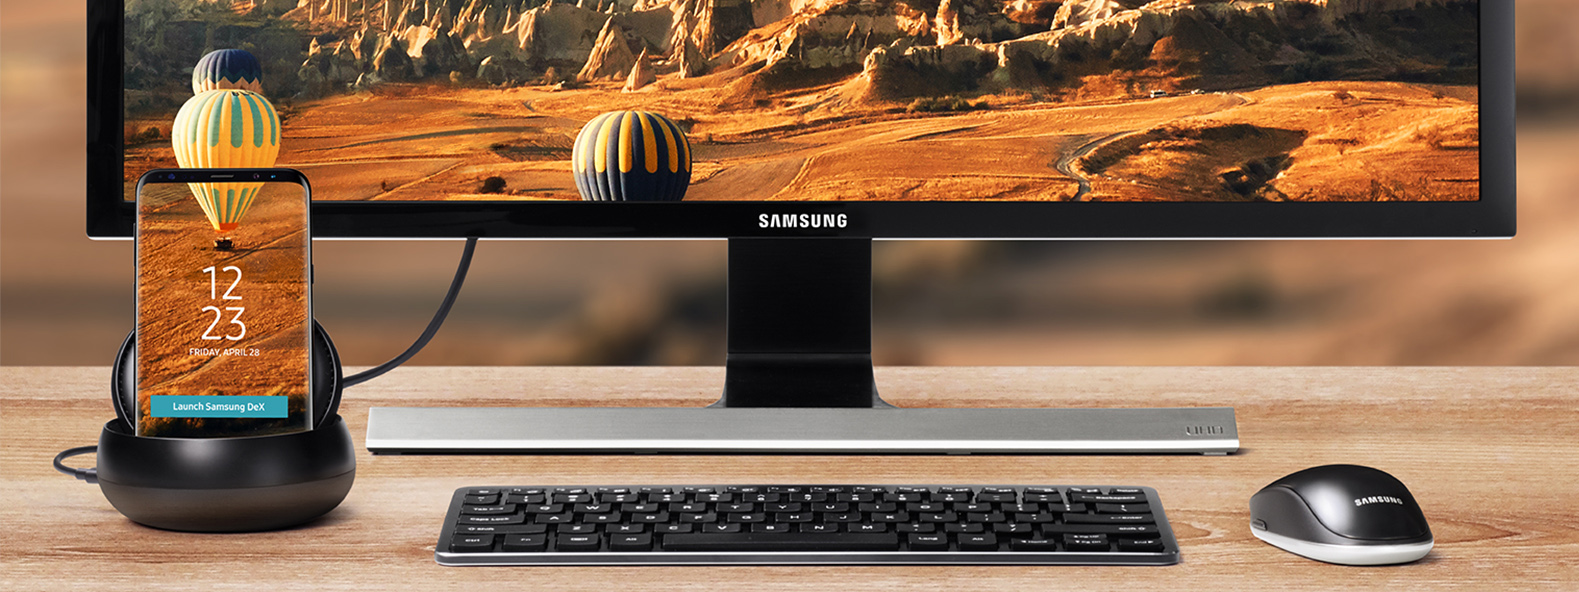 Samsung_DeX_Galaxy_S8_desktop_2.jpeg